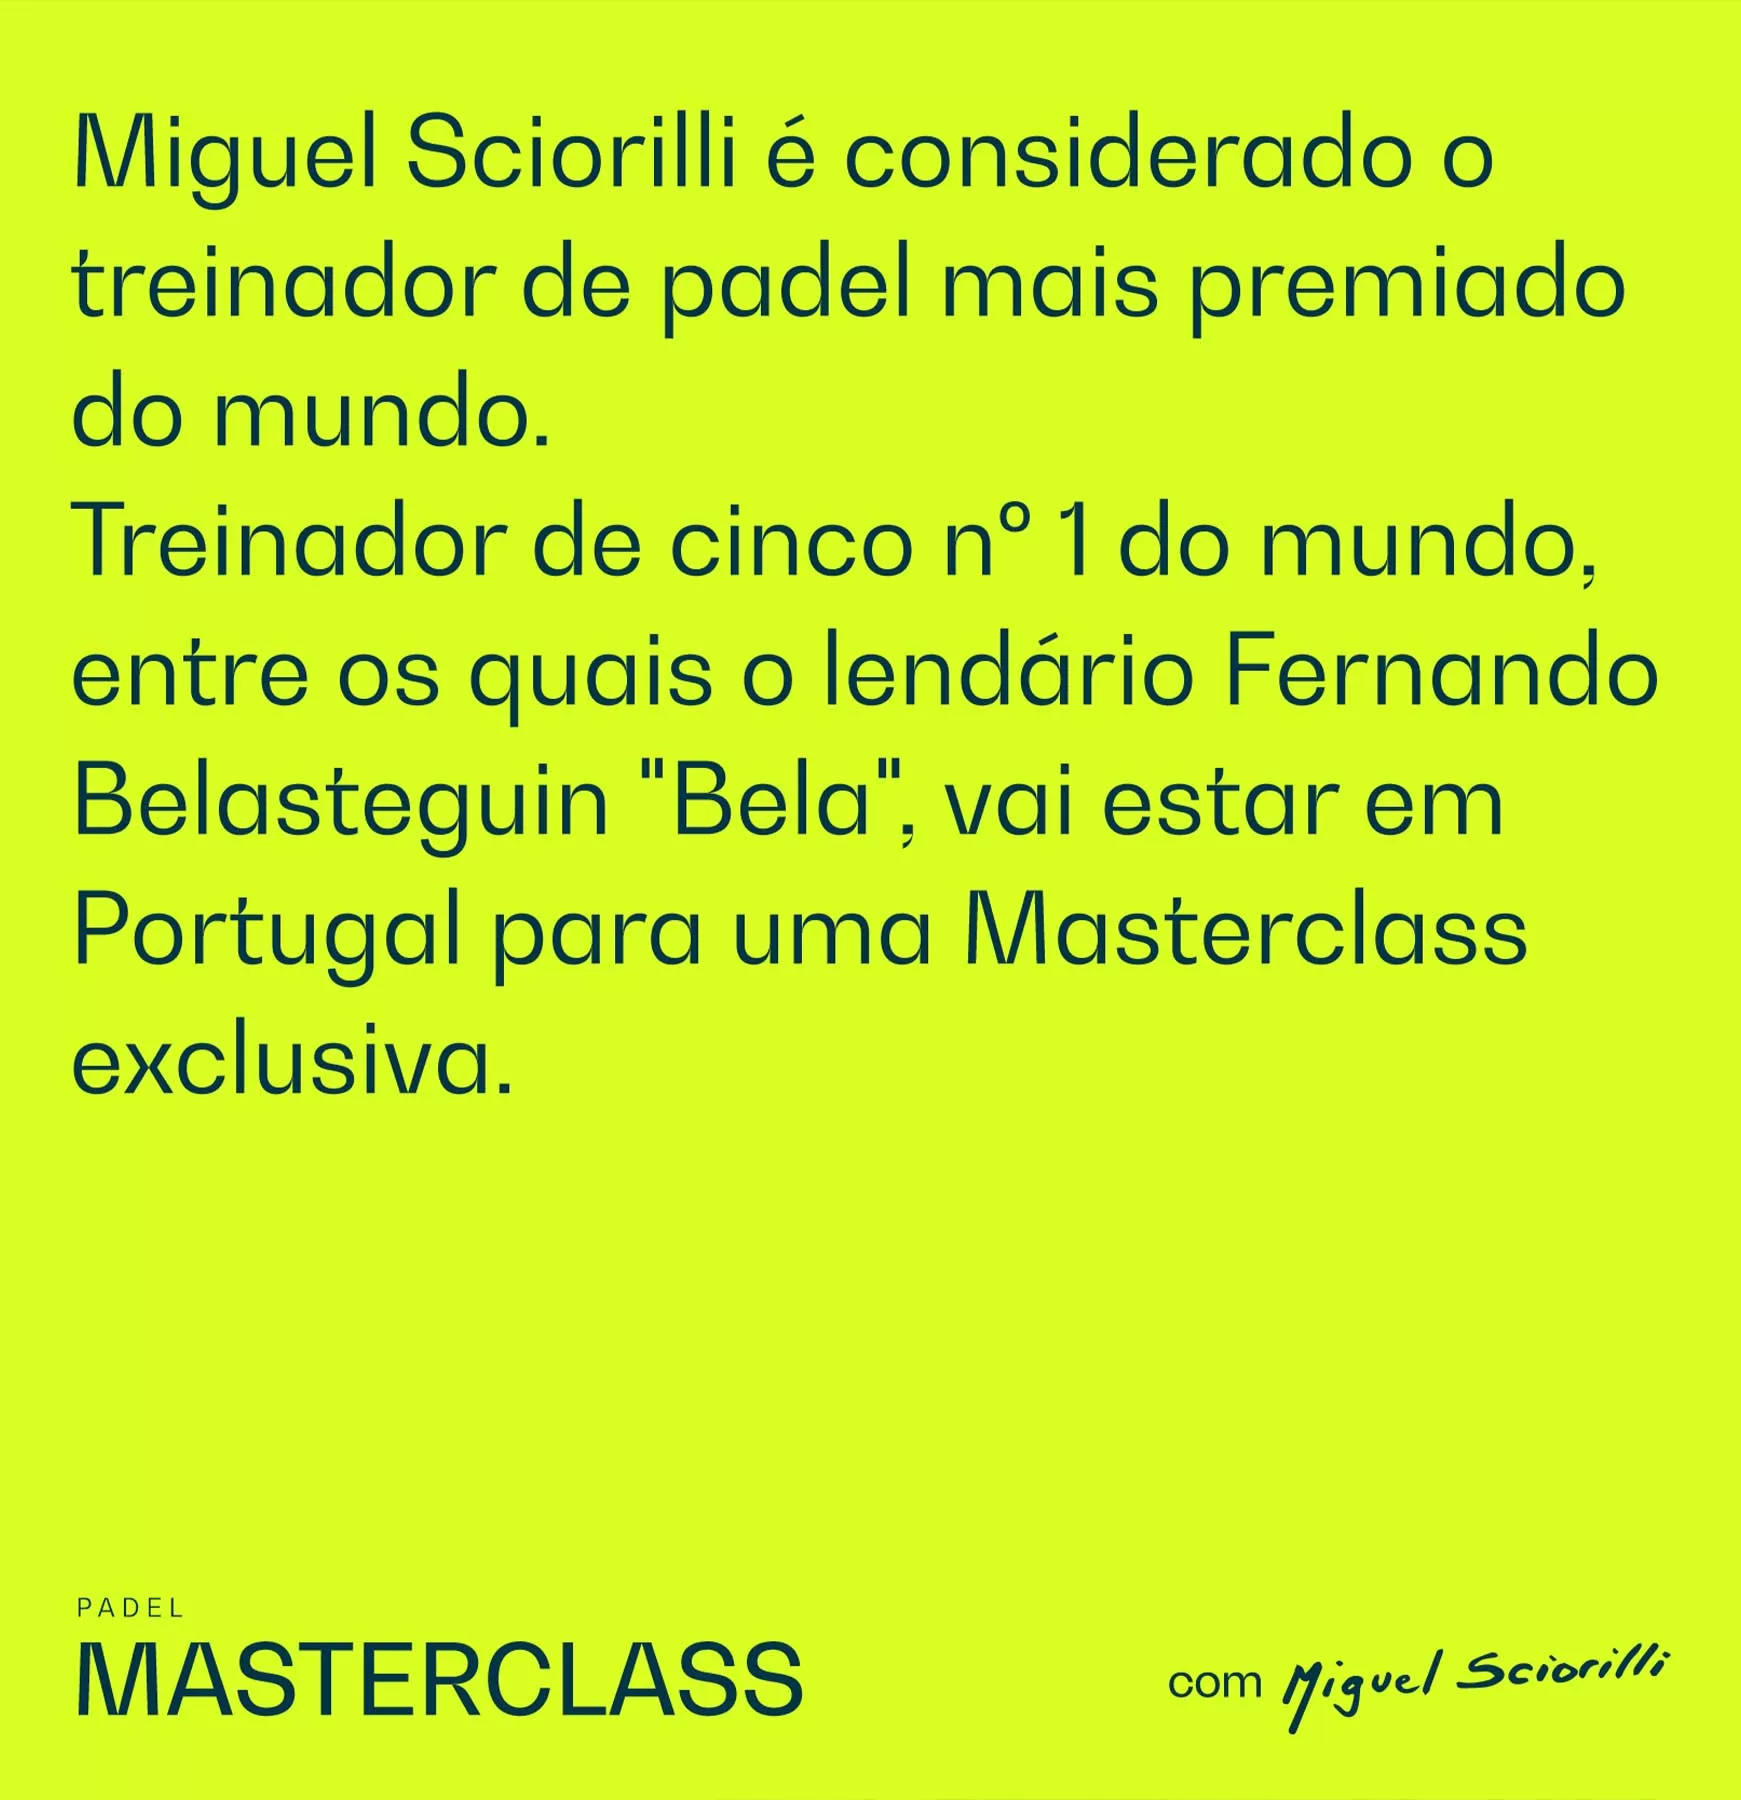 Masterclass com Miguel Sciorilli